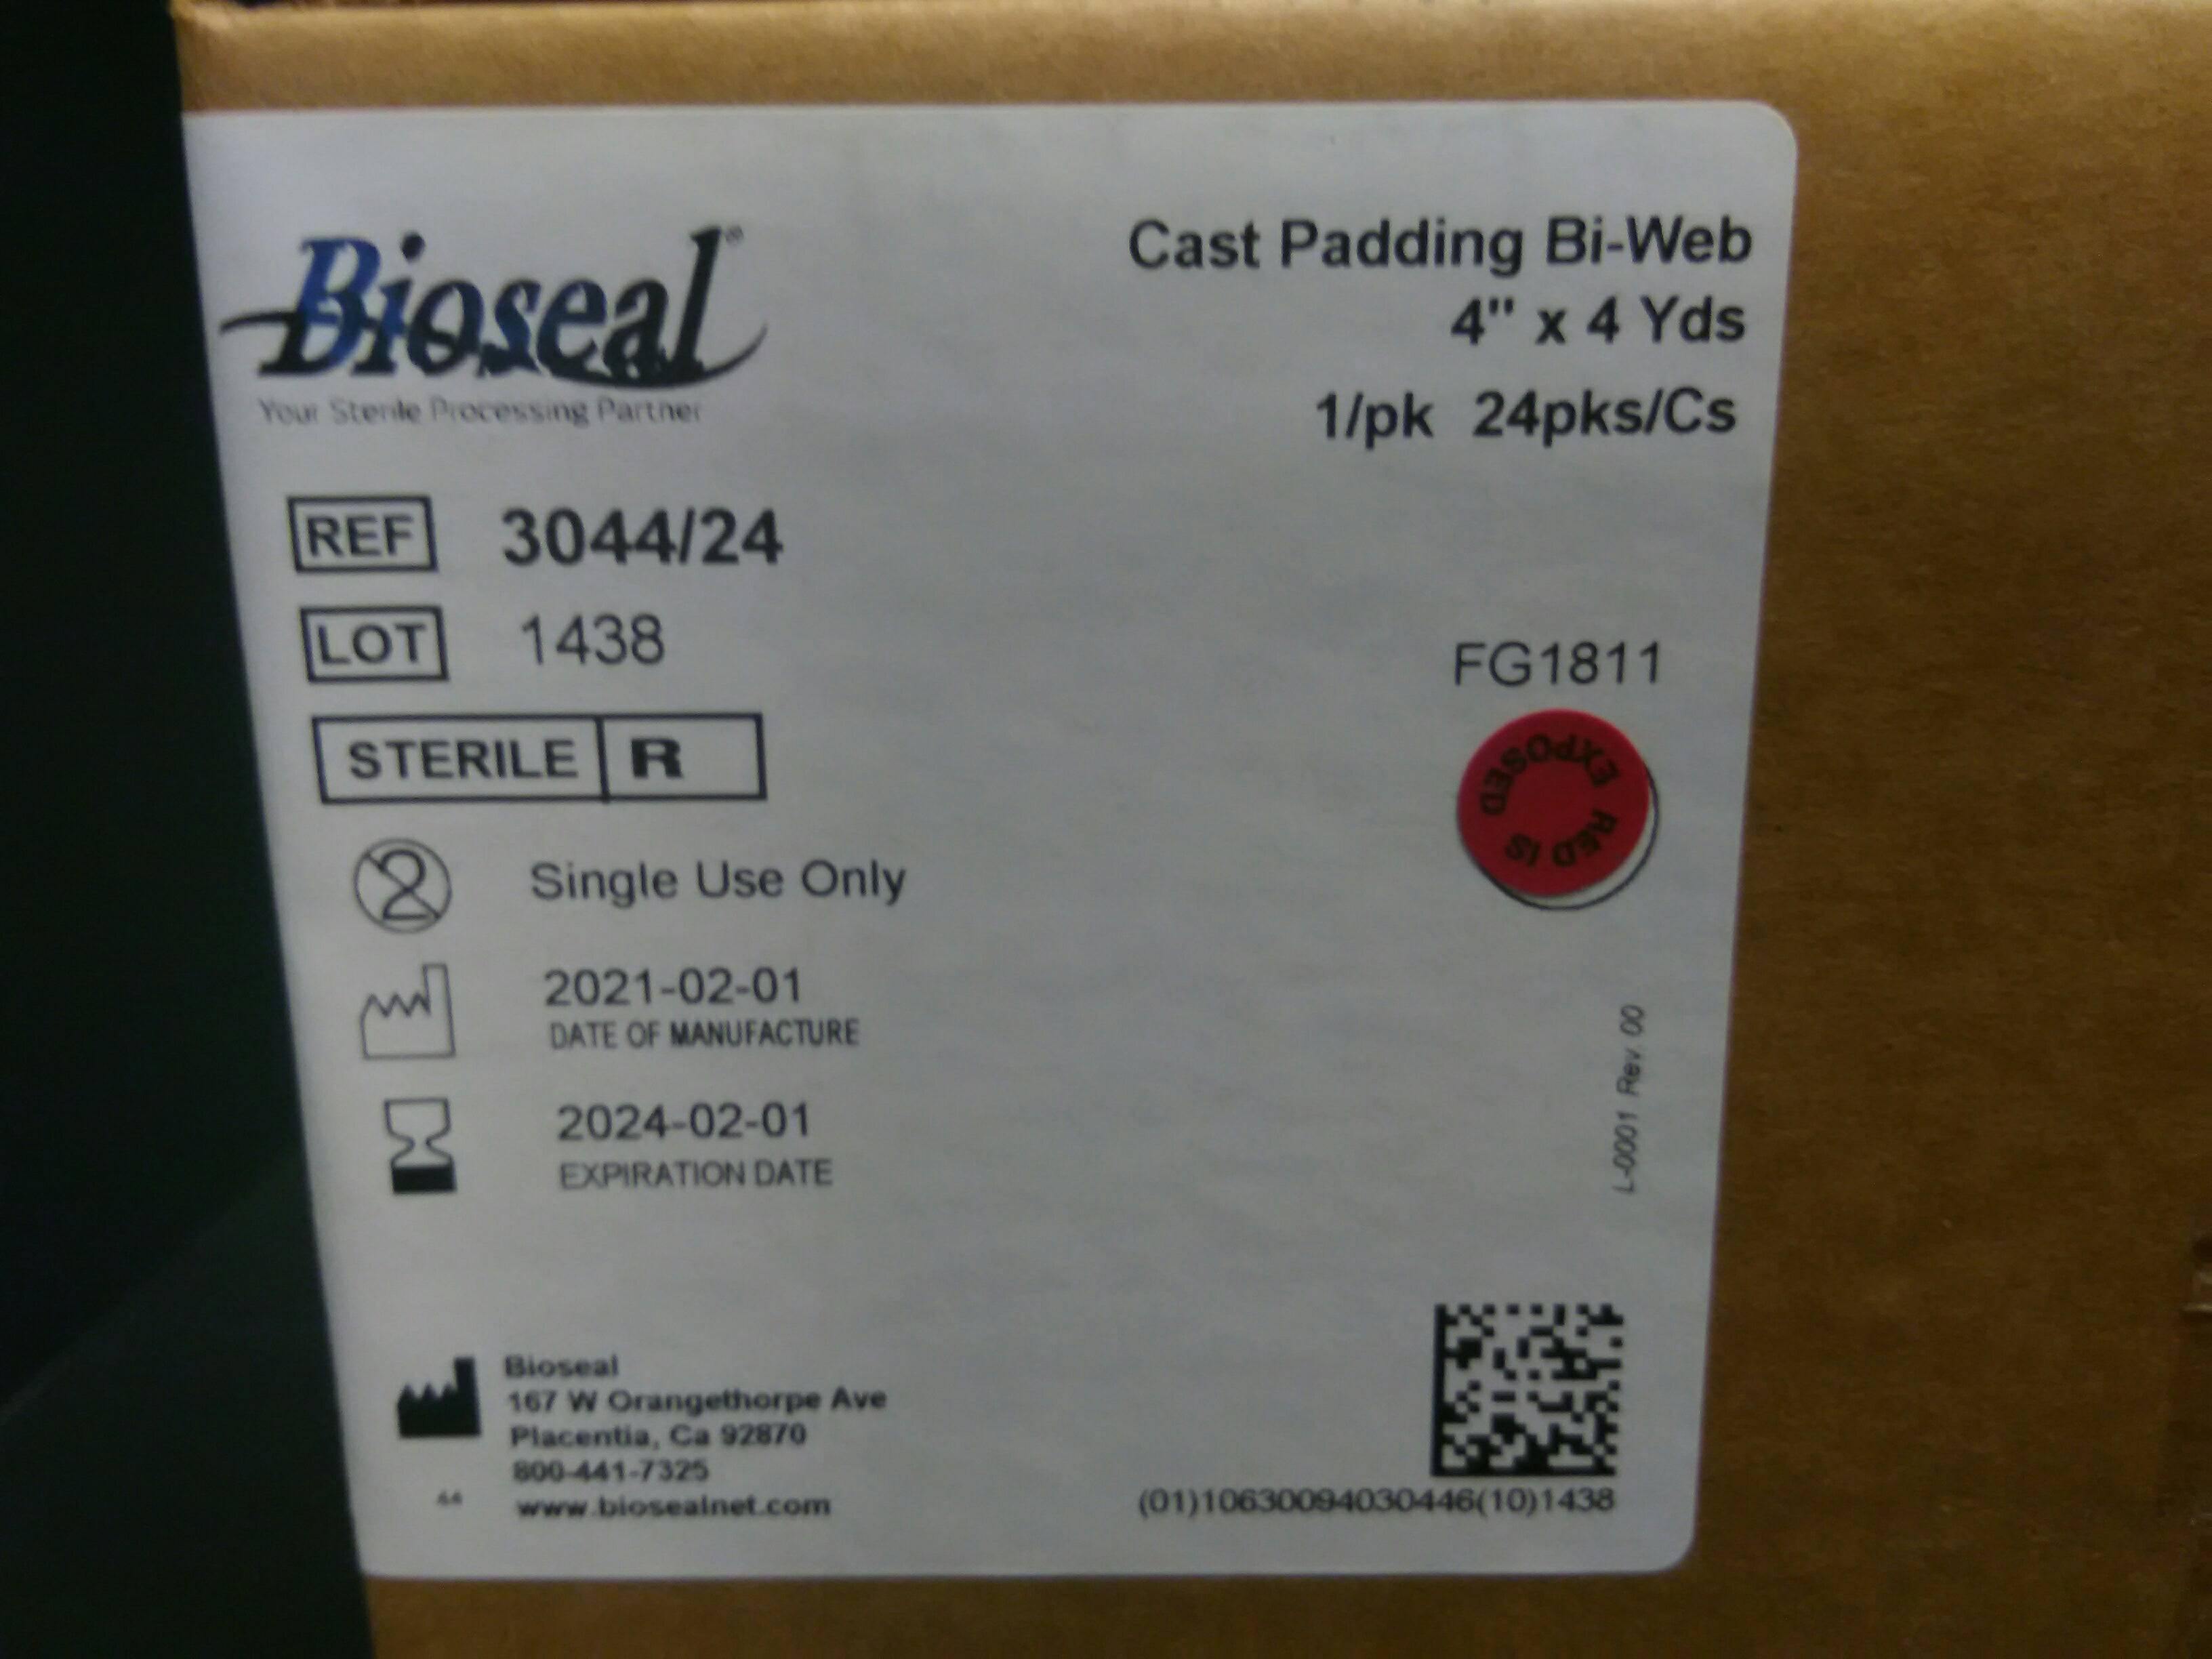 BIOSEAL 03044-24 CAST PADDING WEBRIL 4